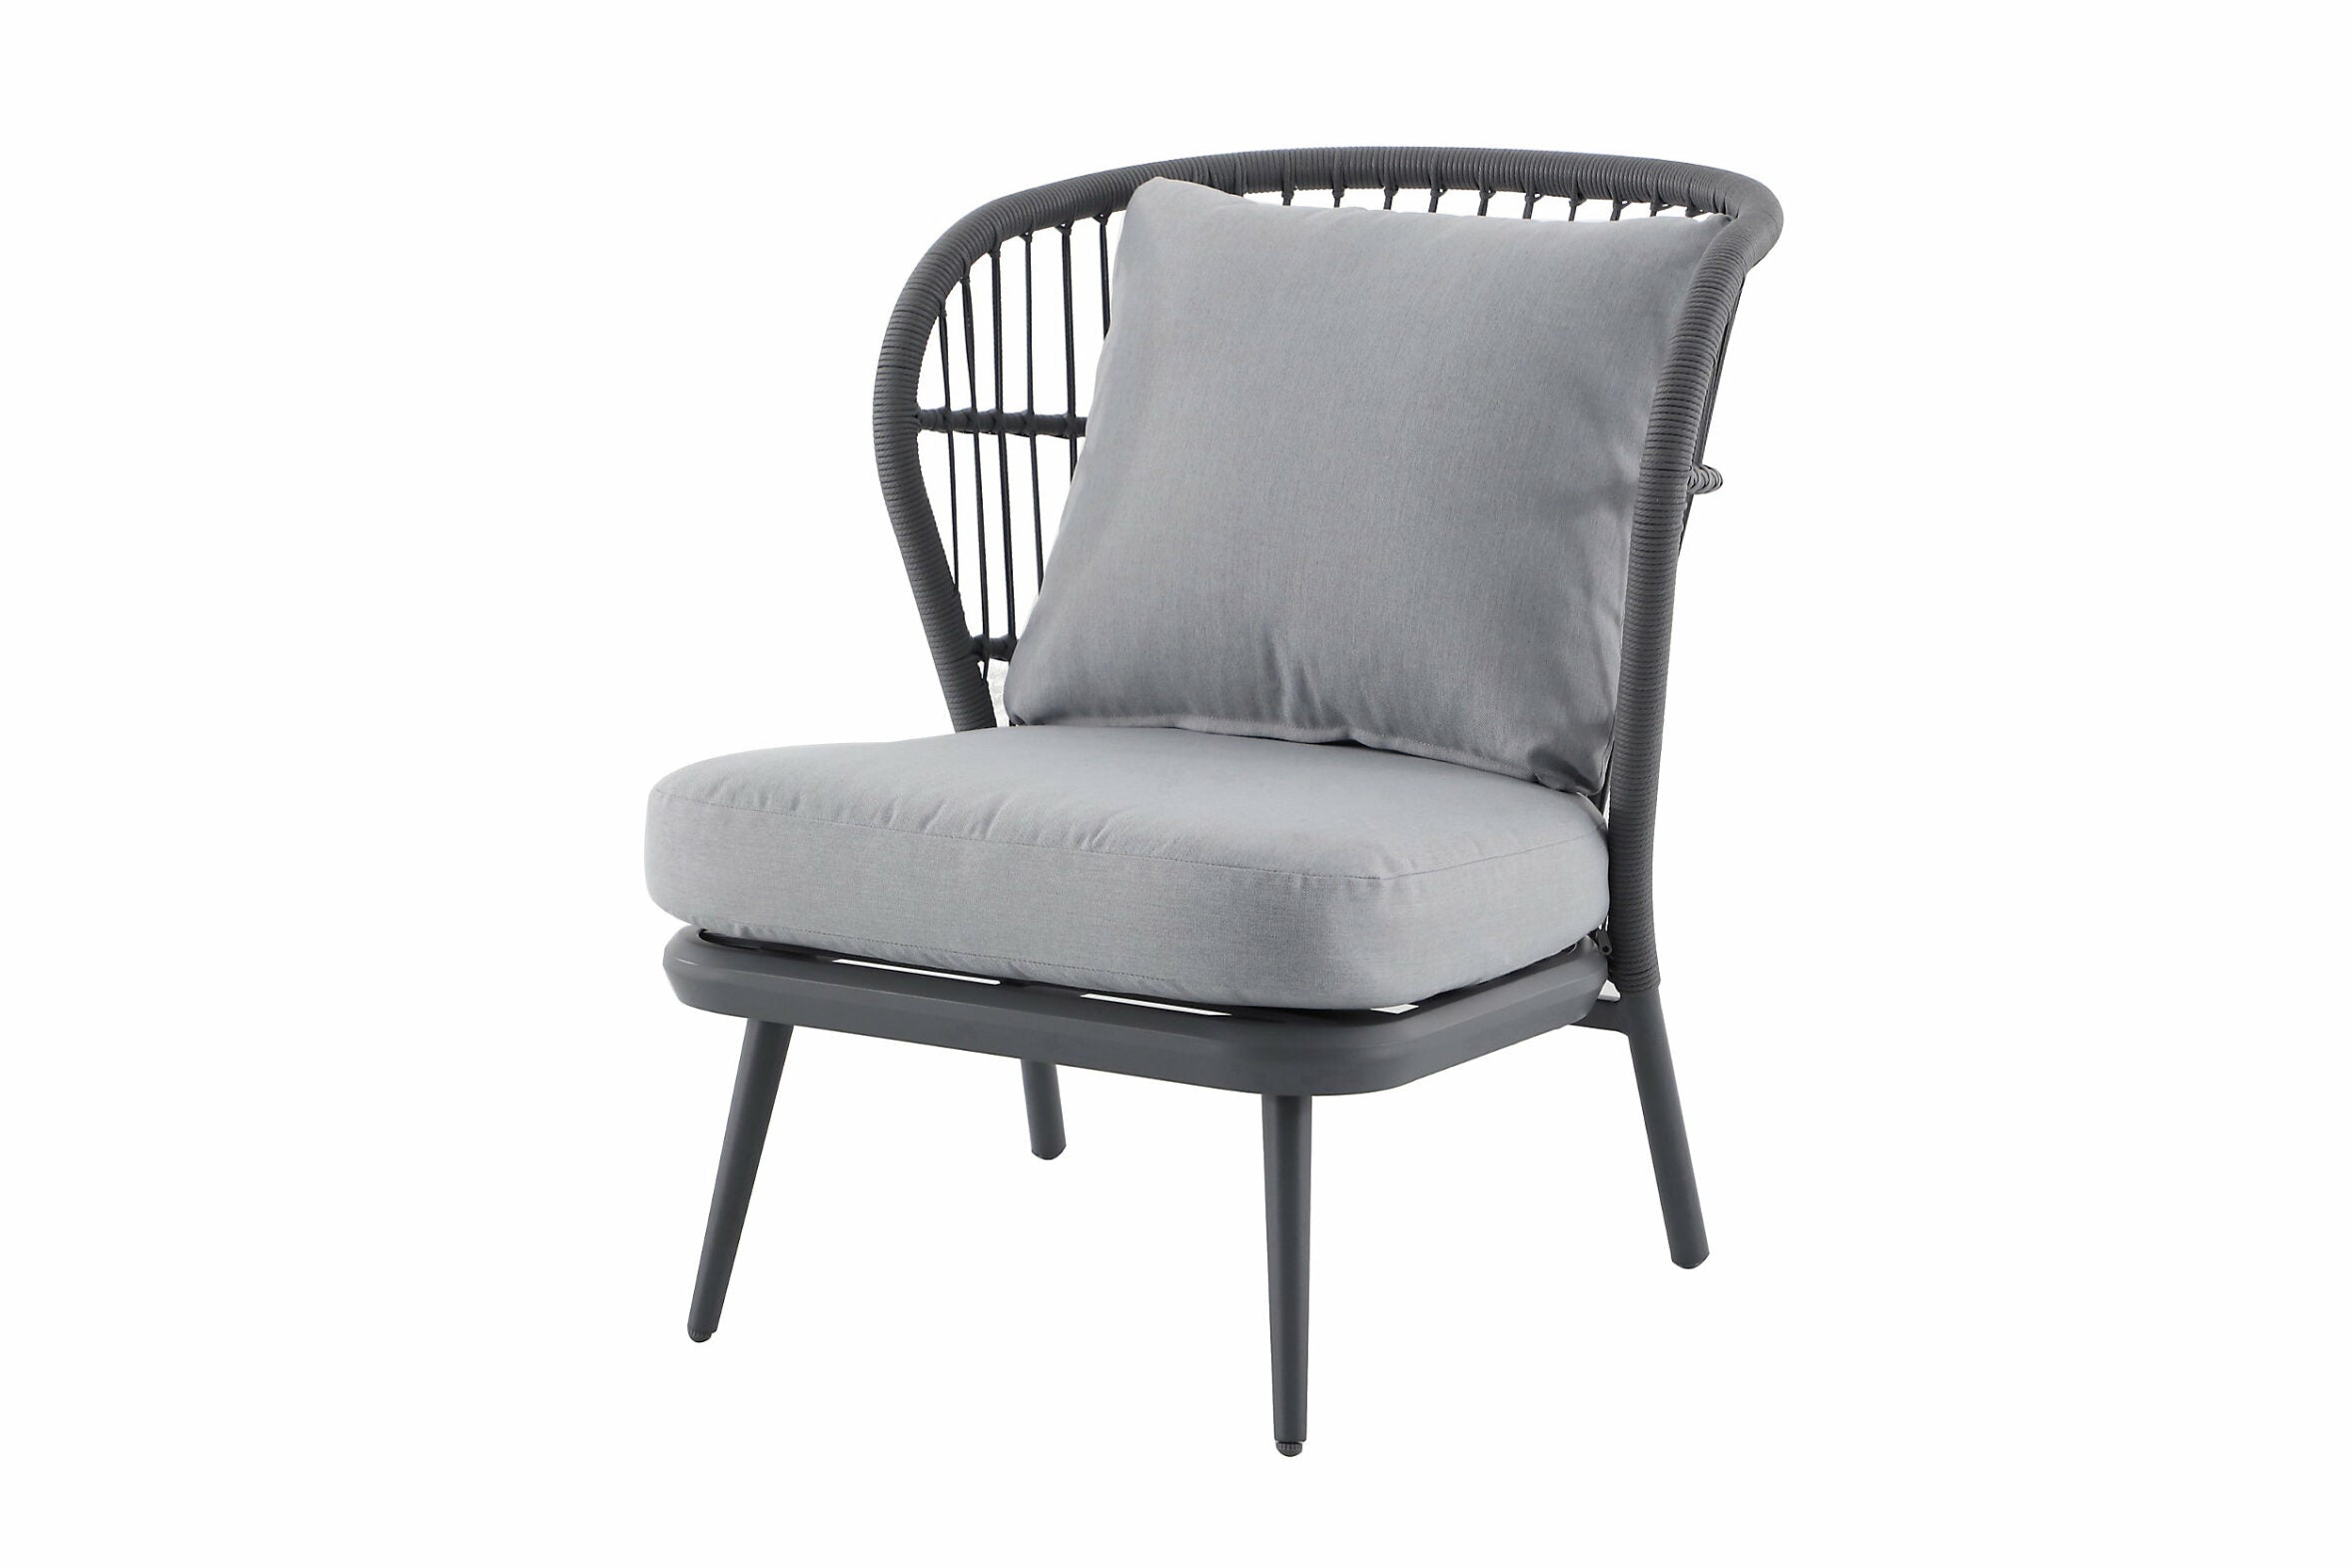 GoodHome Apolima Grey Aluminium 1 Seater Coffee set, Garden furniture set - Rattan Garden Furniture 8961